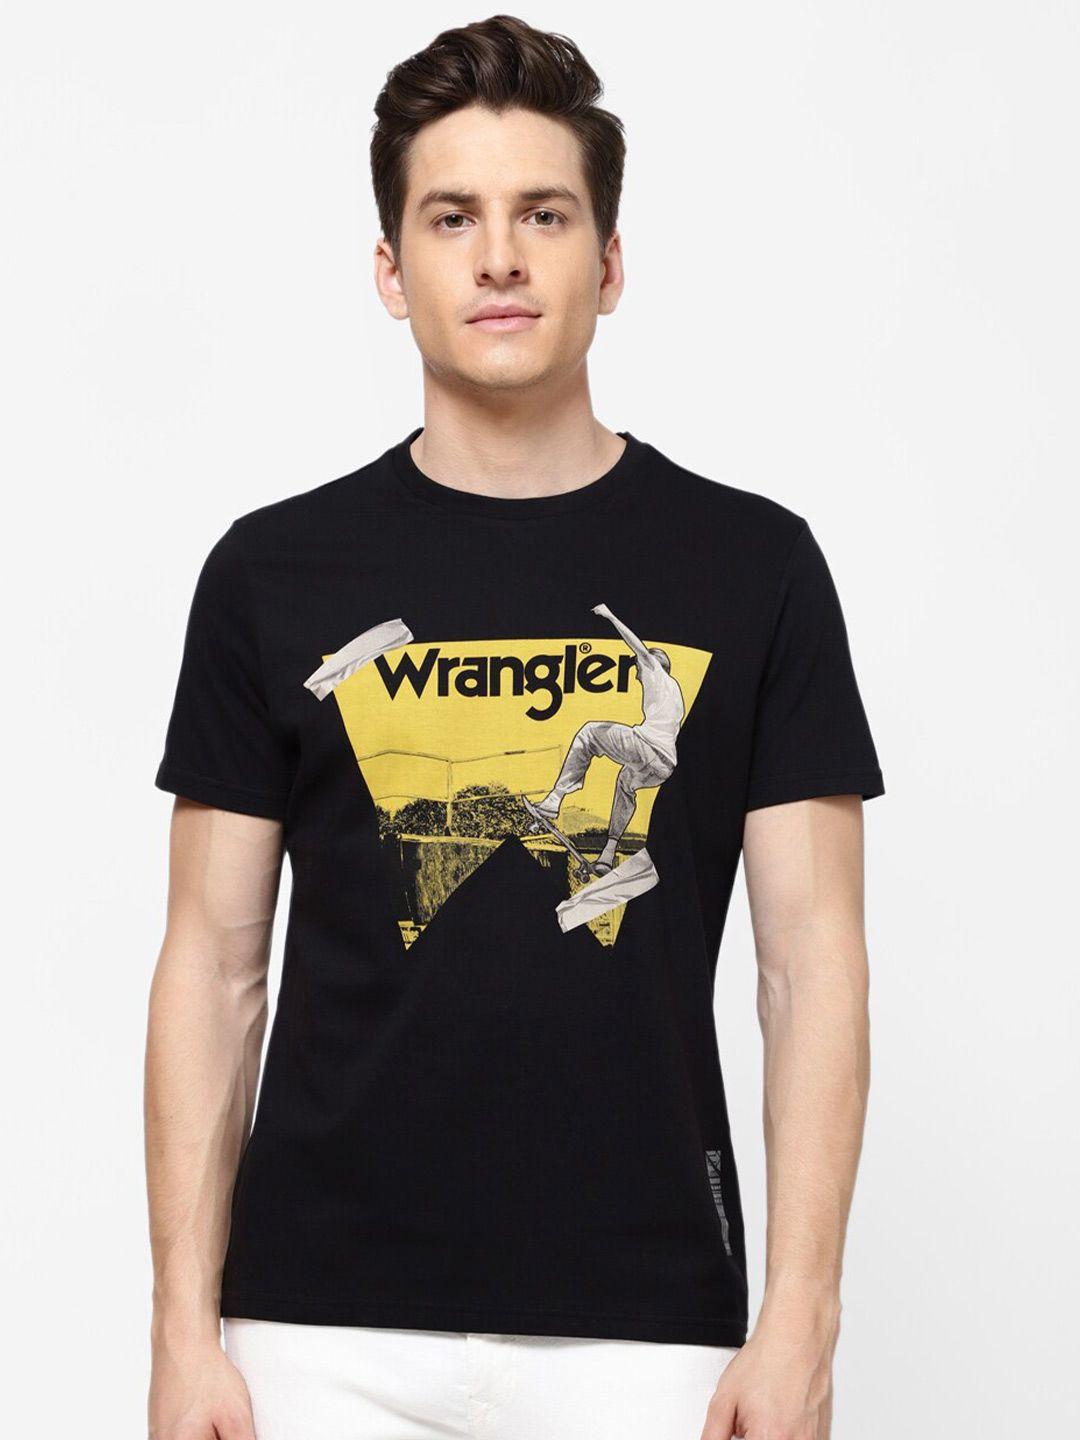 wrangler-men-black-&-yellow-brand-logo-printed-t-shirt